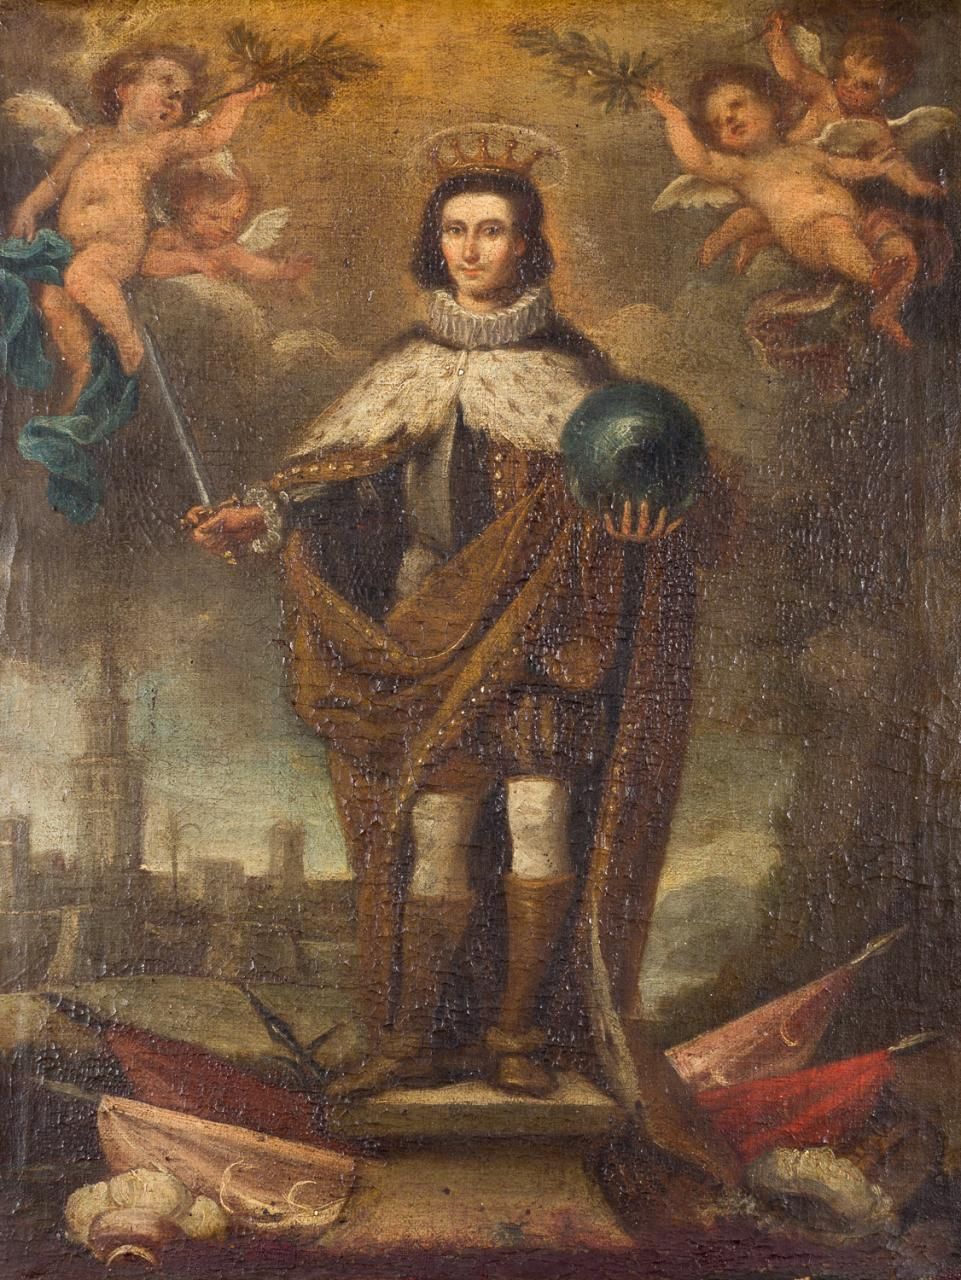 ESCUELA SEVILLANA, Fns. S. XVII Saint Ferdinand
Huile sur toile
48 x 37 cm